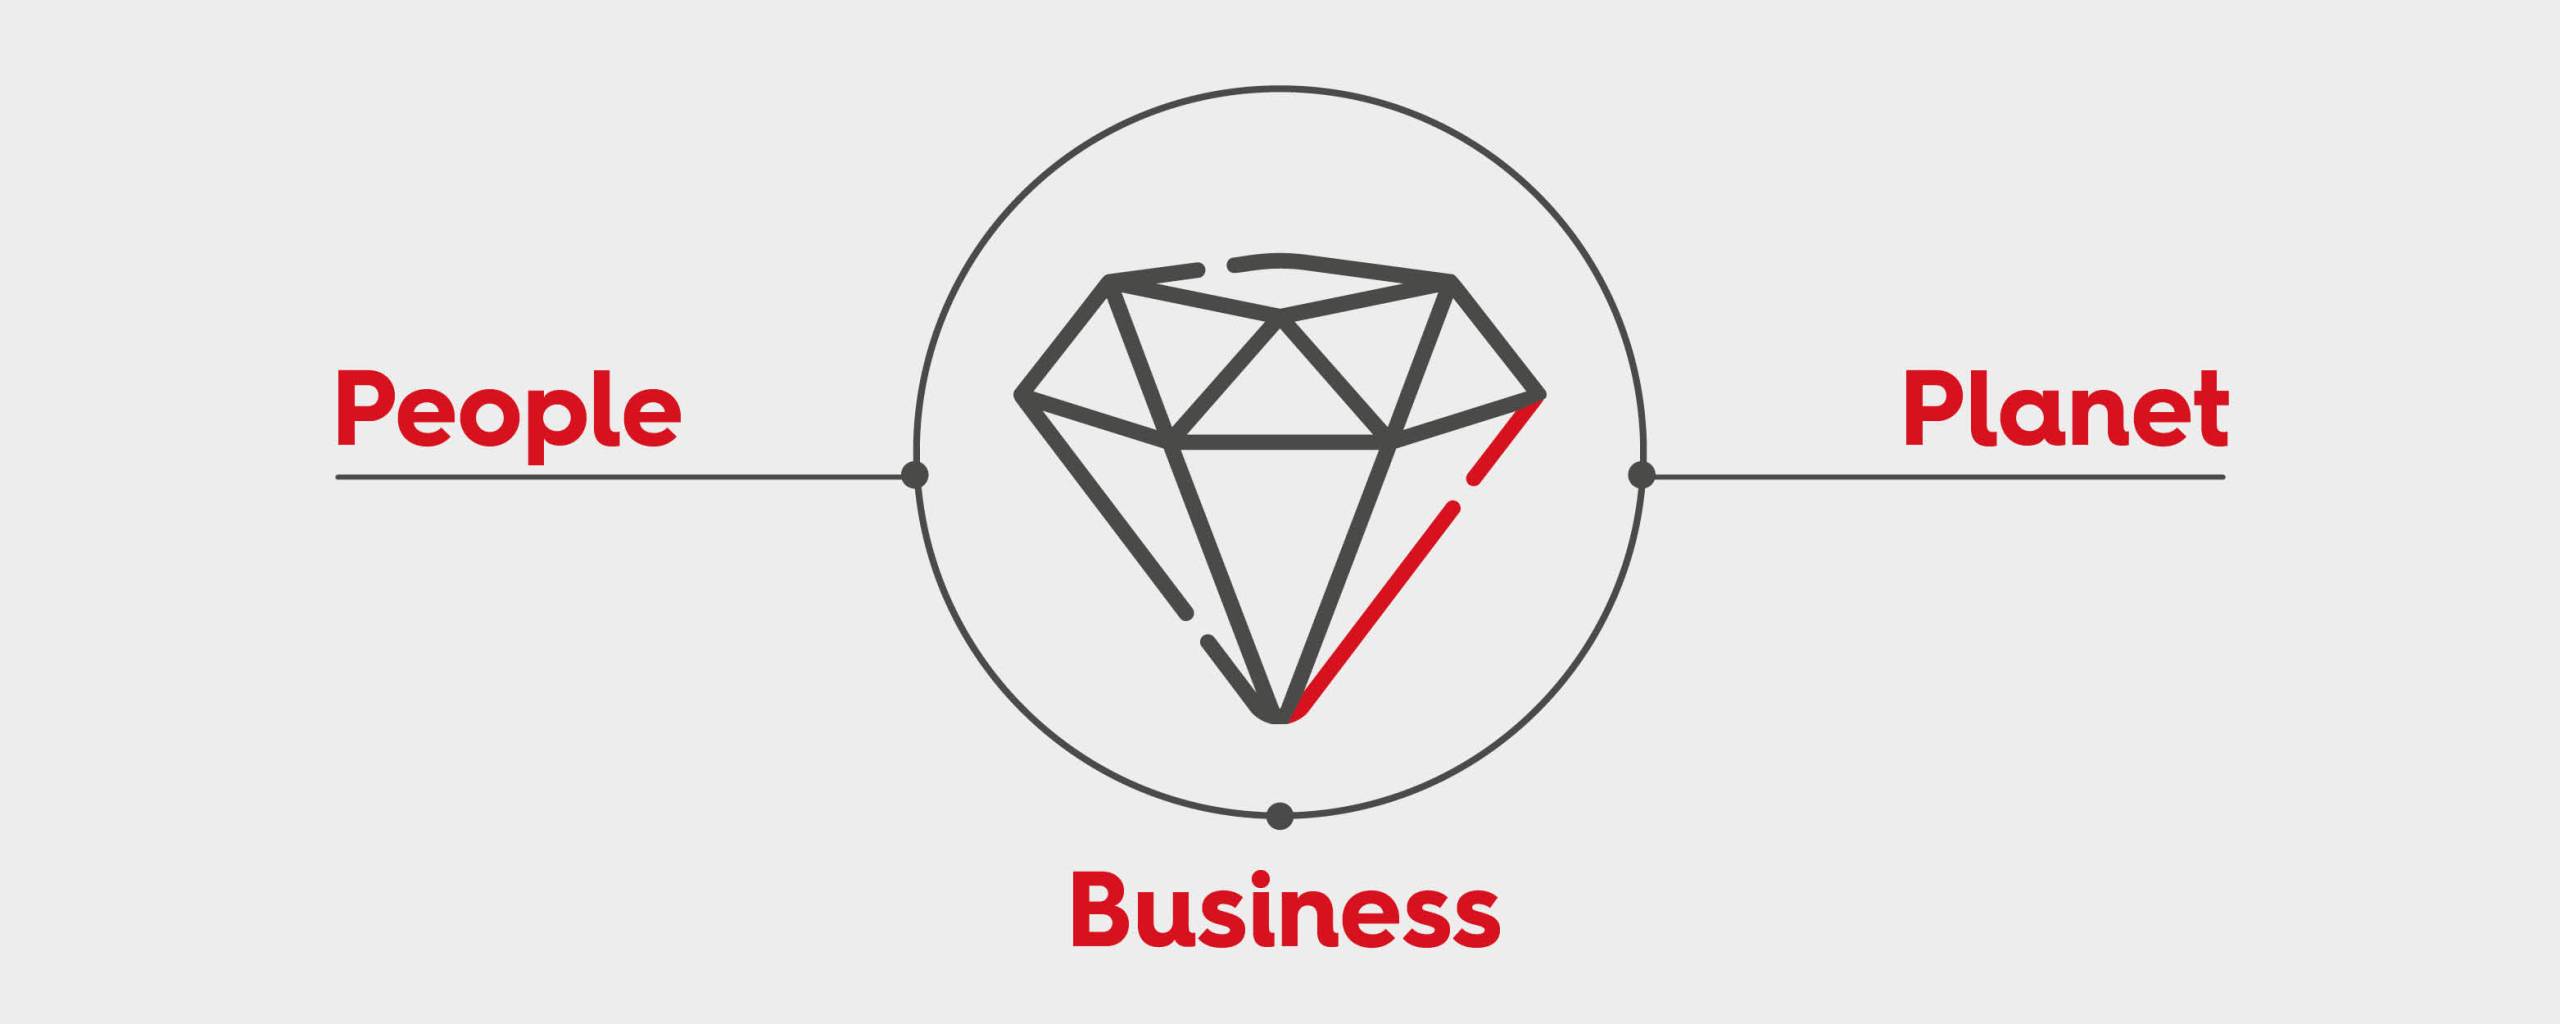 Value Diamond - People, Planet, Business